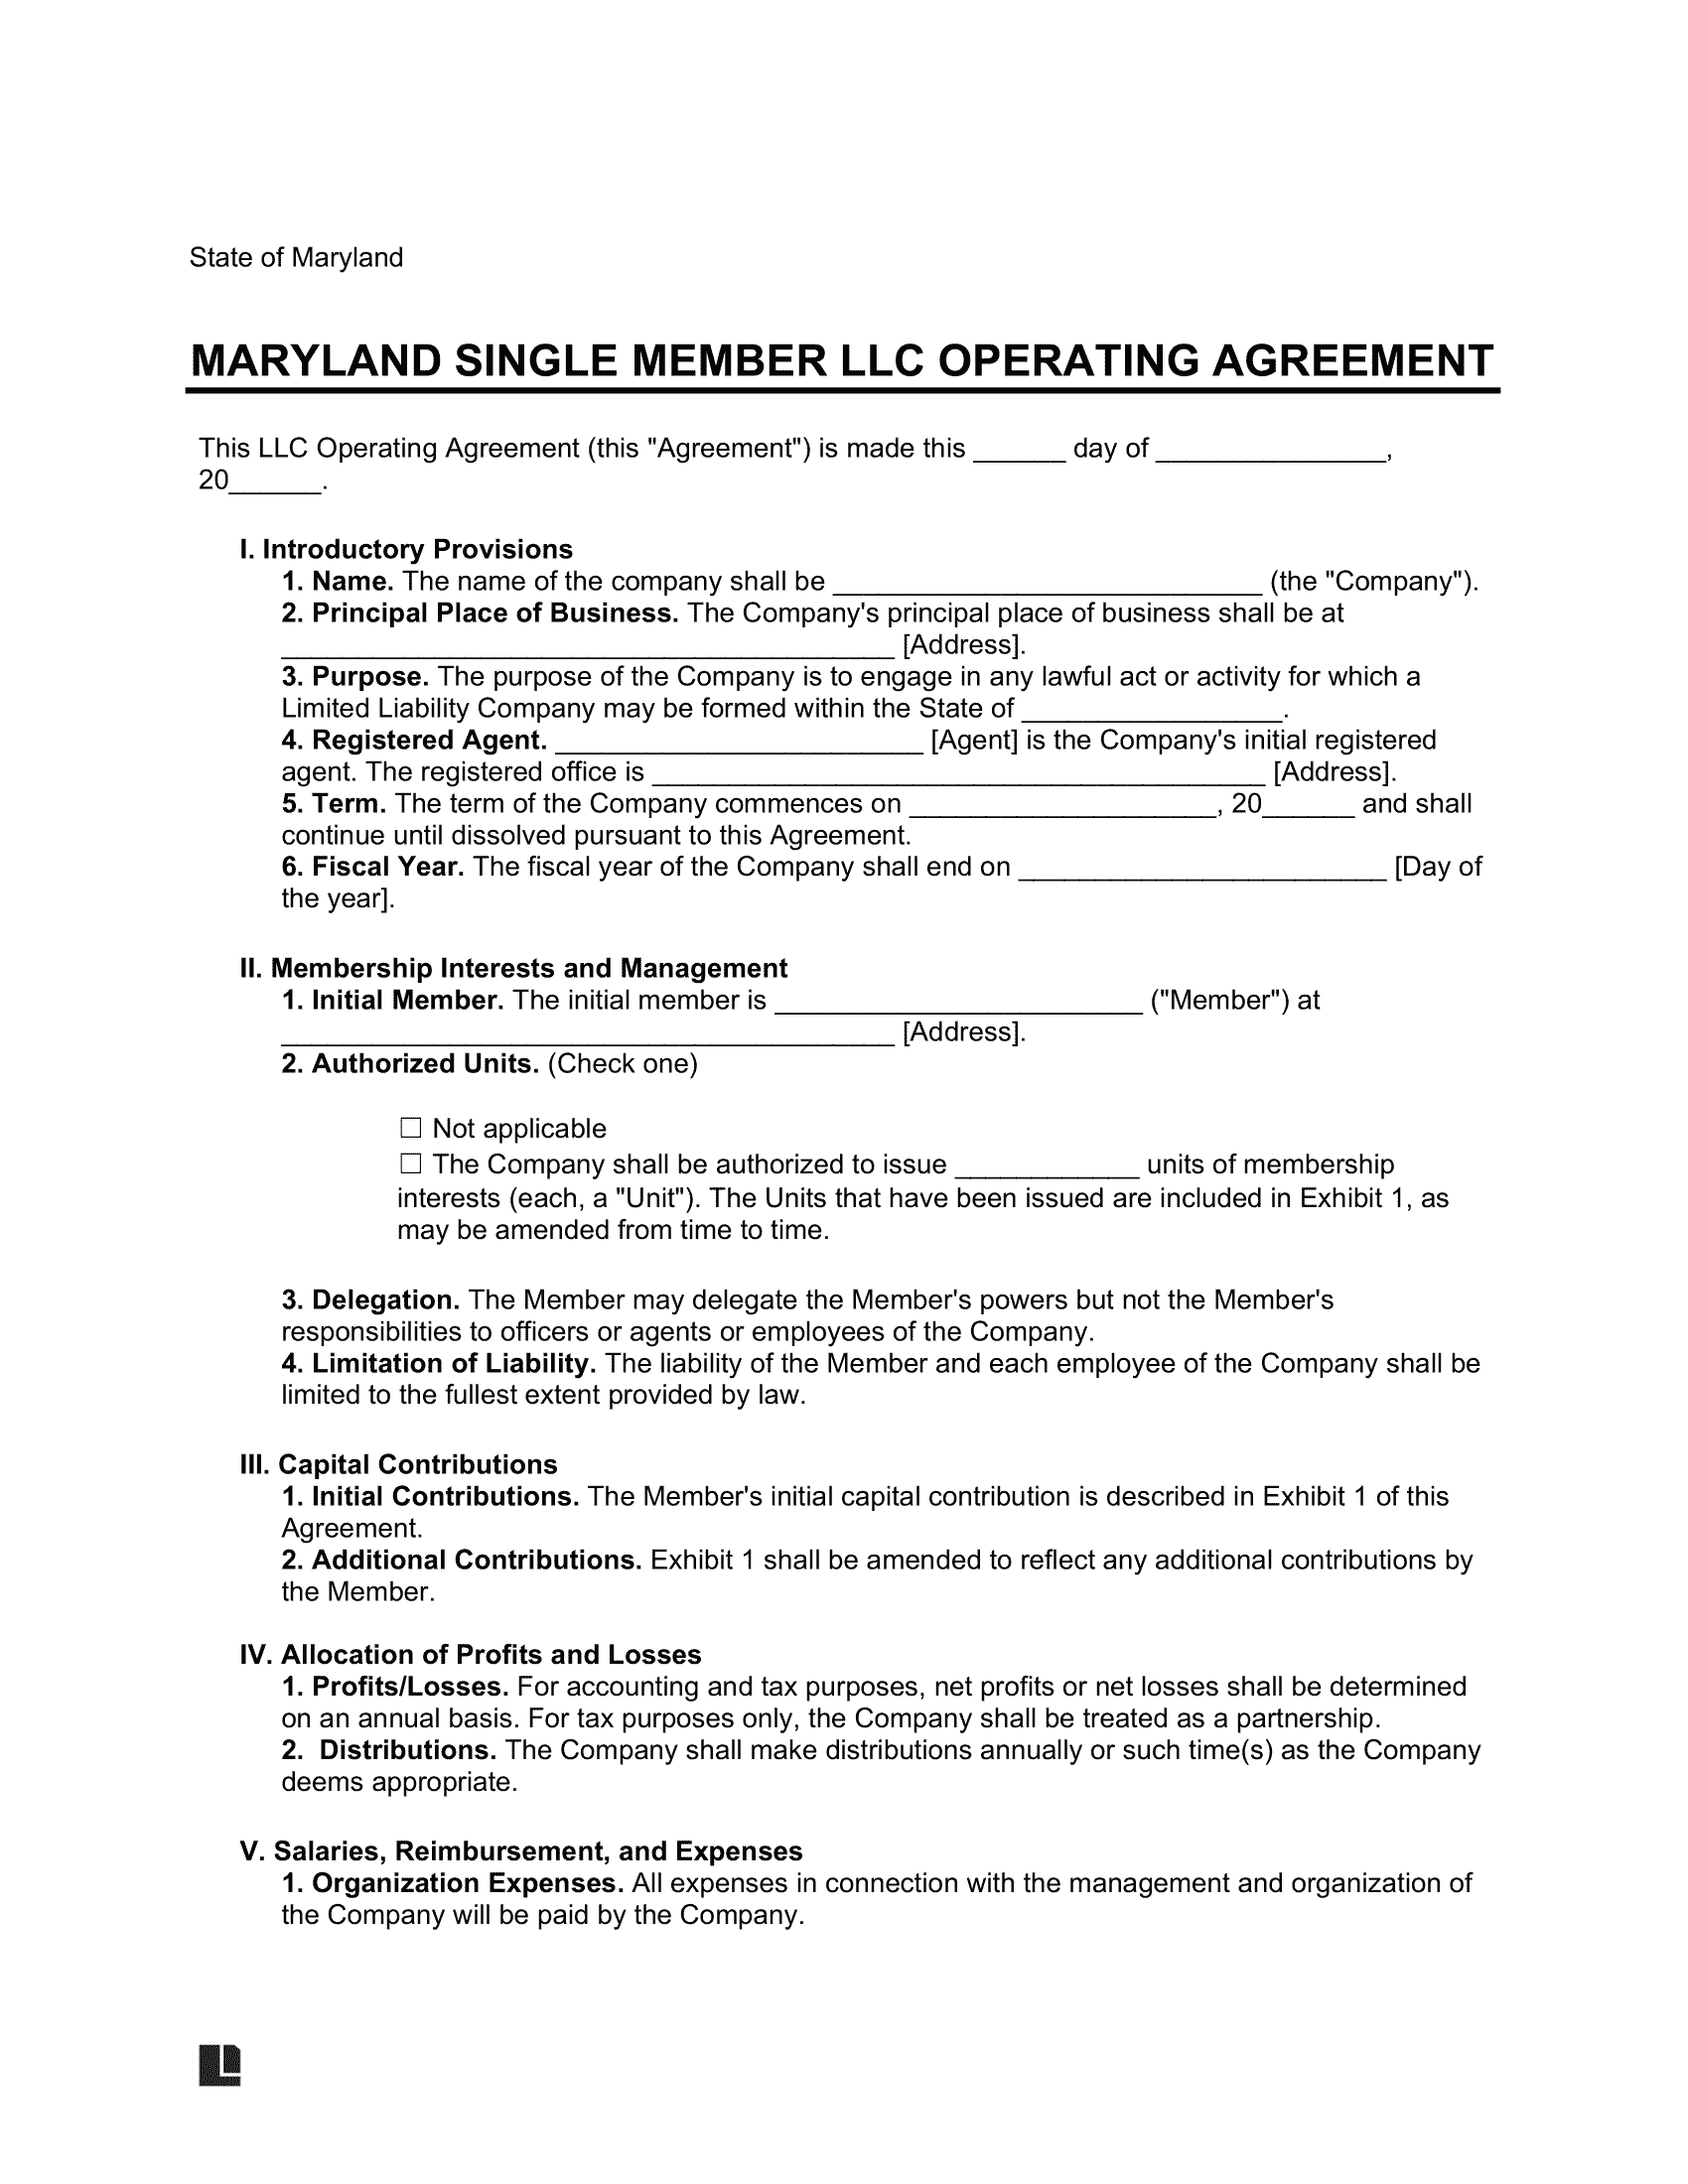 Maryland Single Member LLC Operating Agreement Form